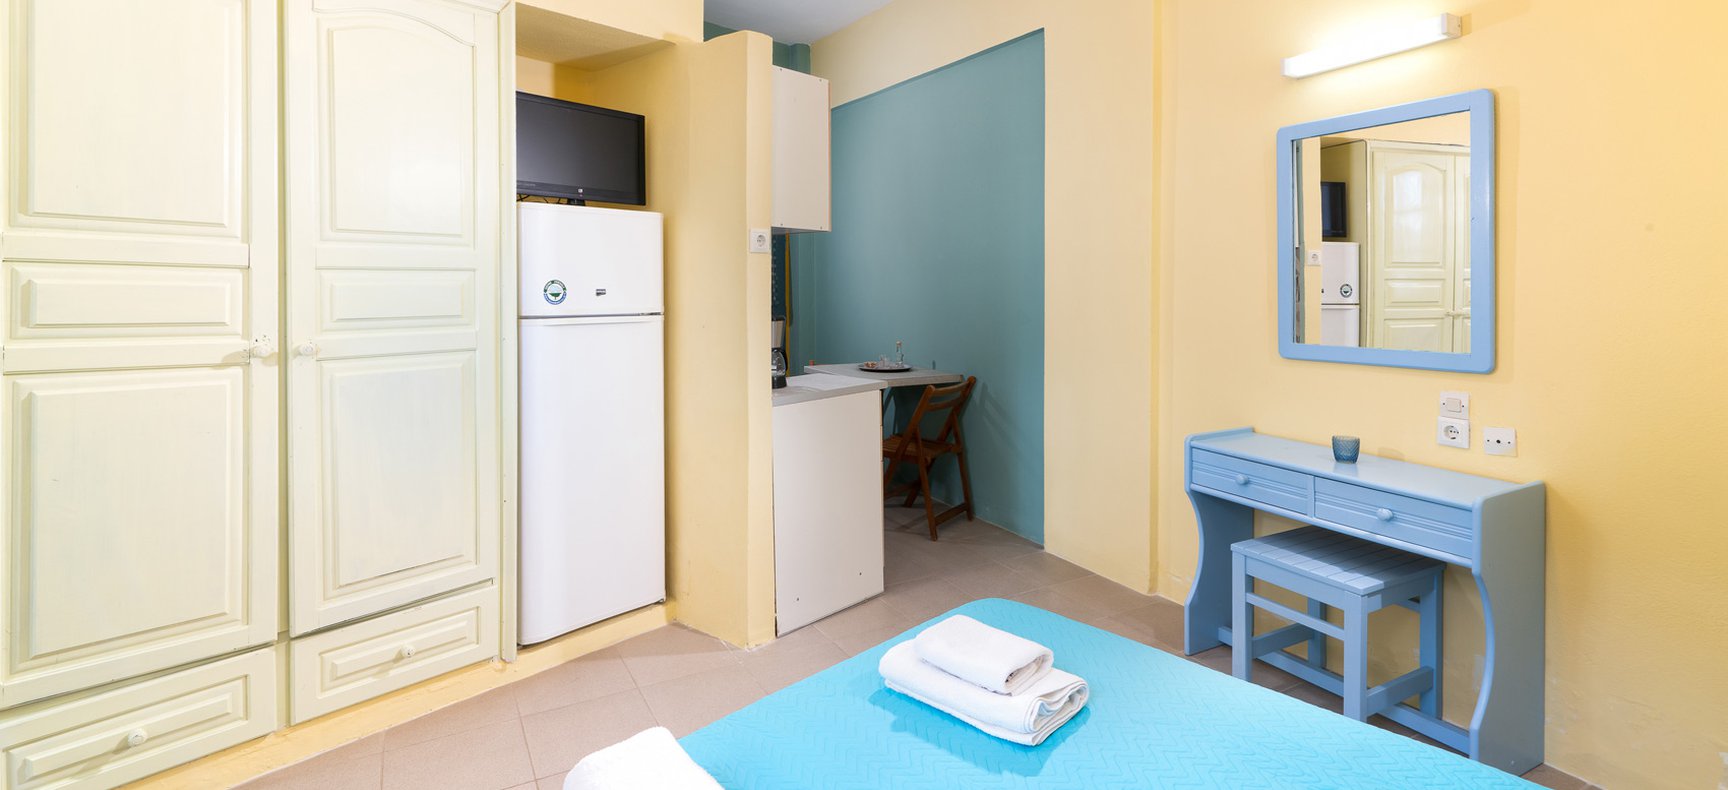 Afroditi Apartments, Φωτογραφία Διαμερίσματος με εξοπλισμένη κουζίνα